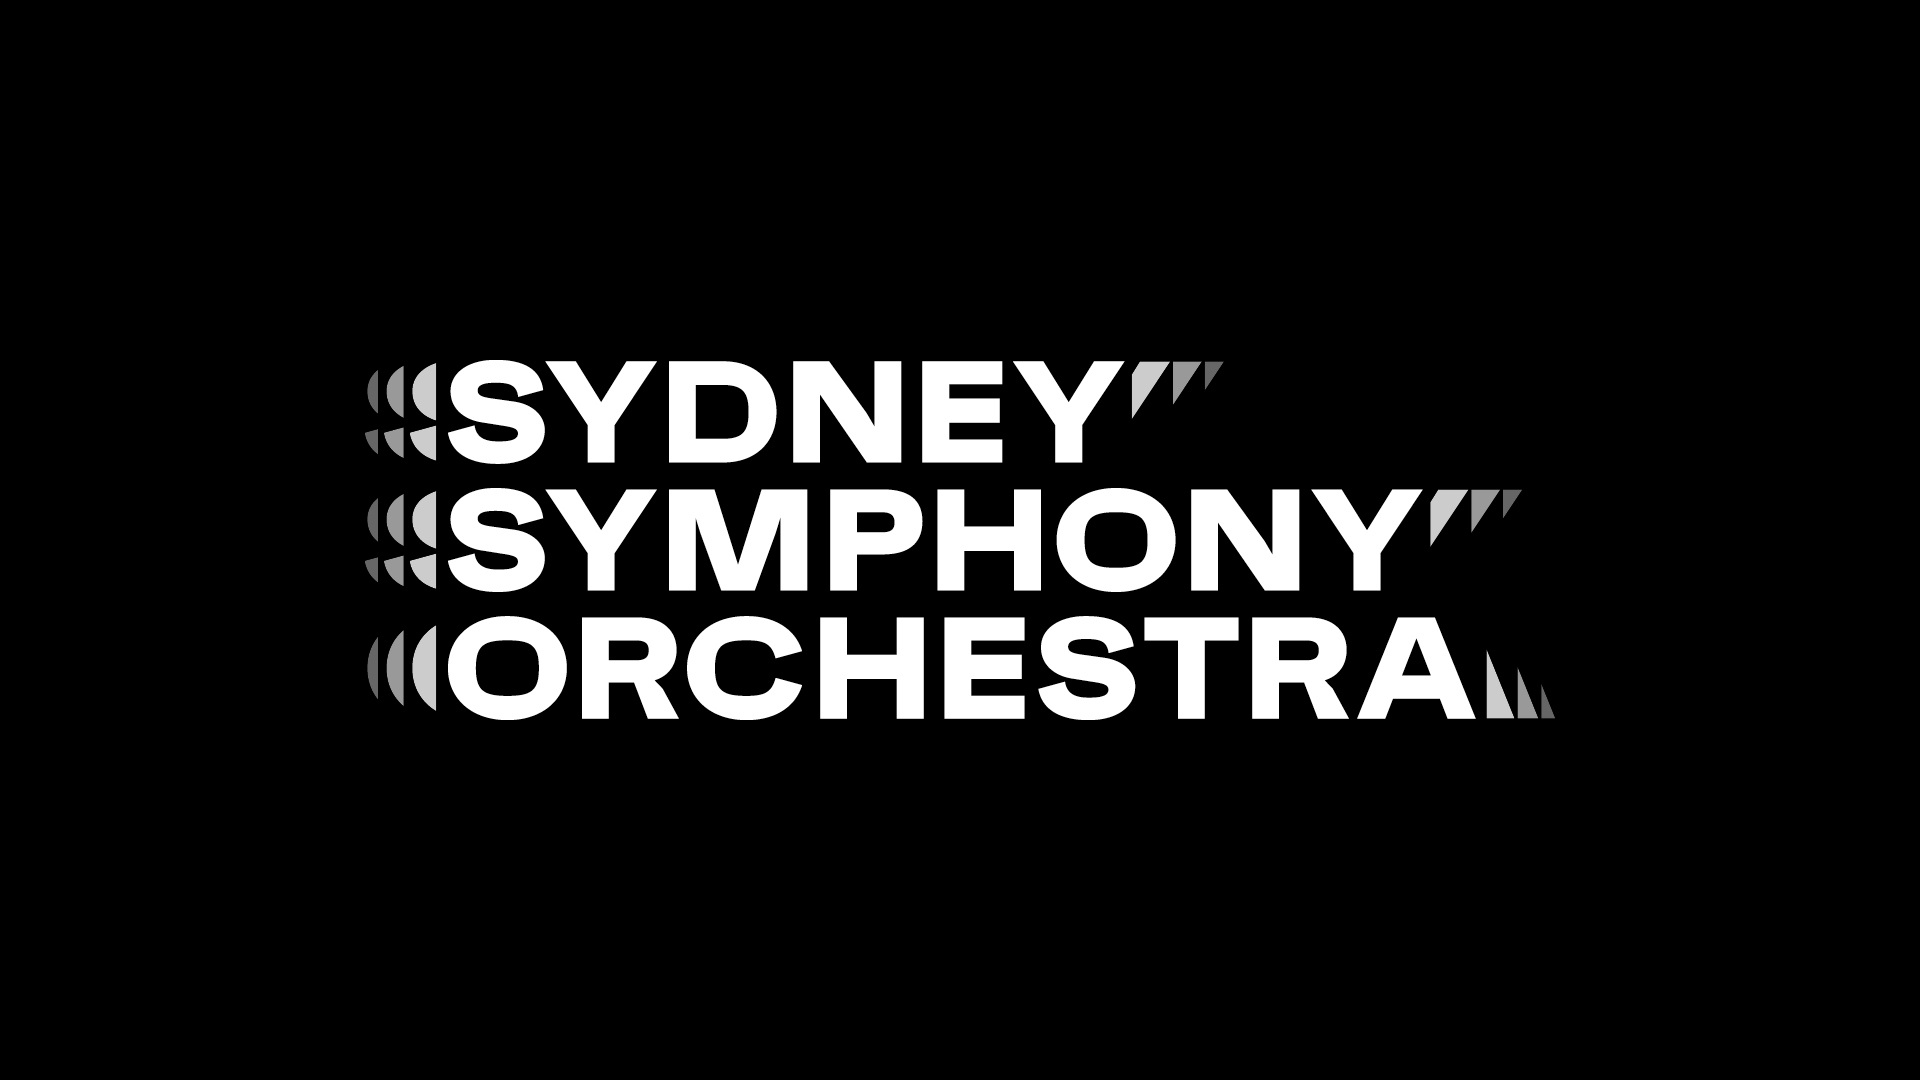 Sydney Symphony Orchestra launches new branding via Principals